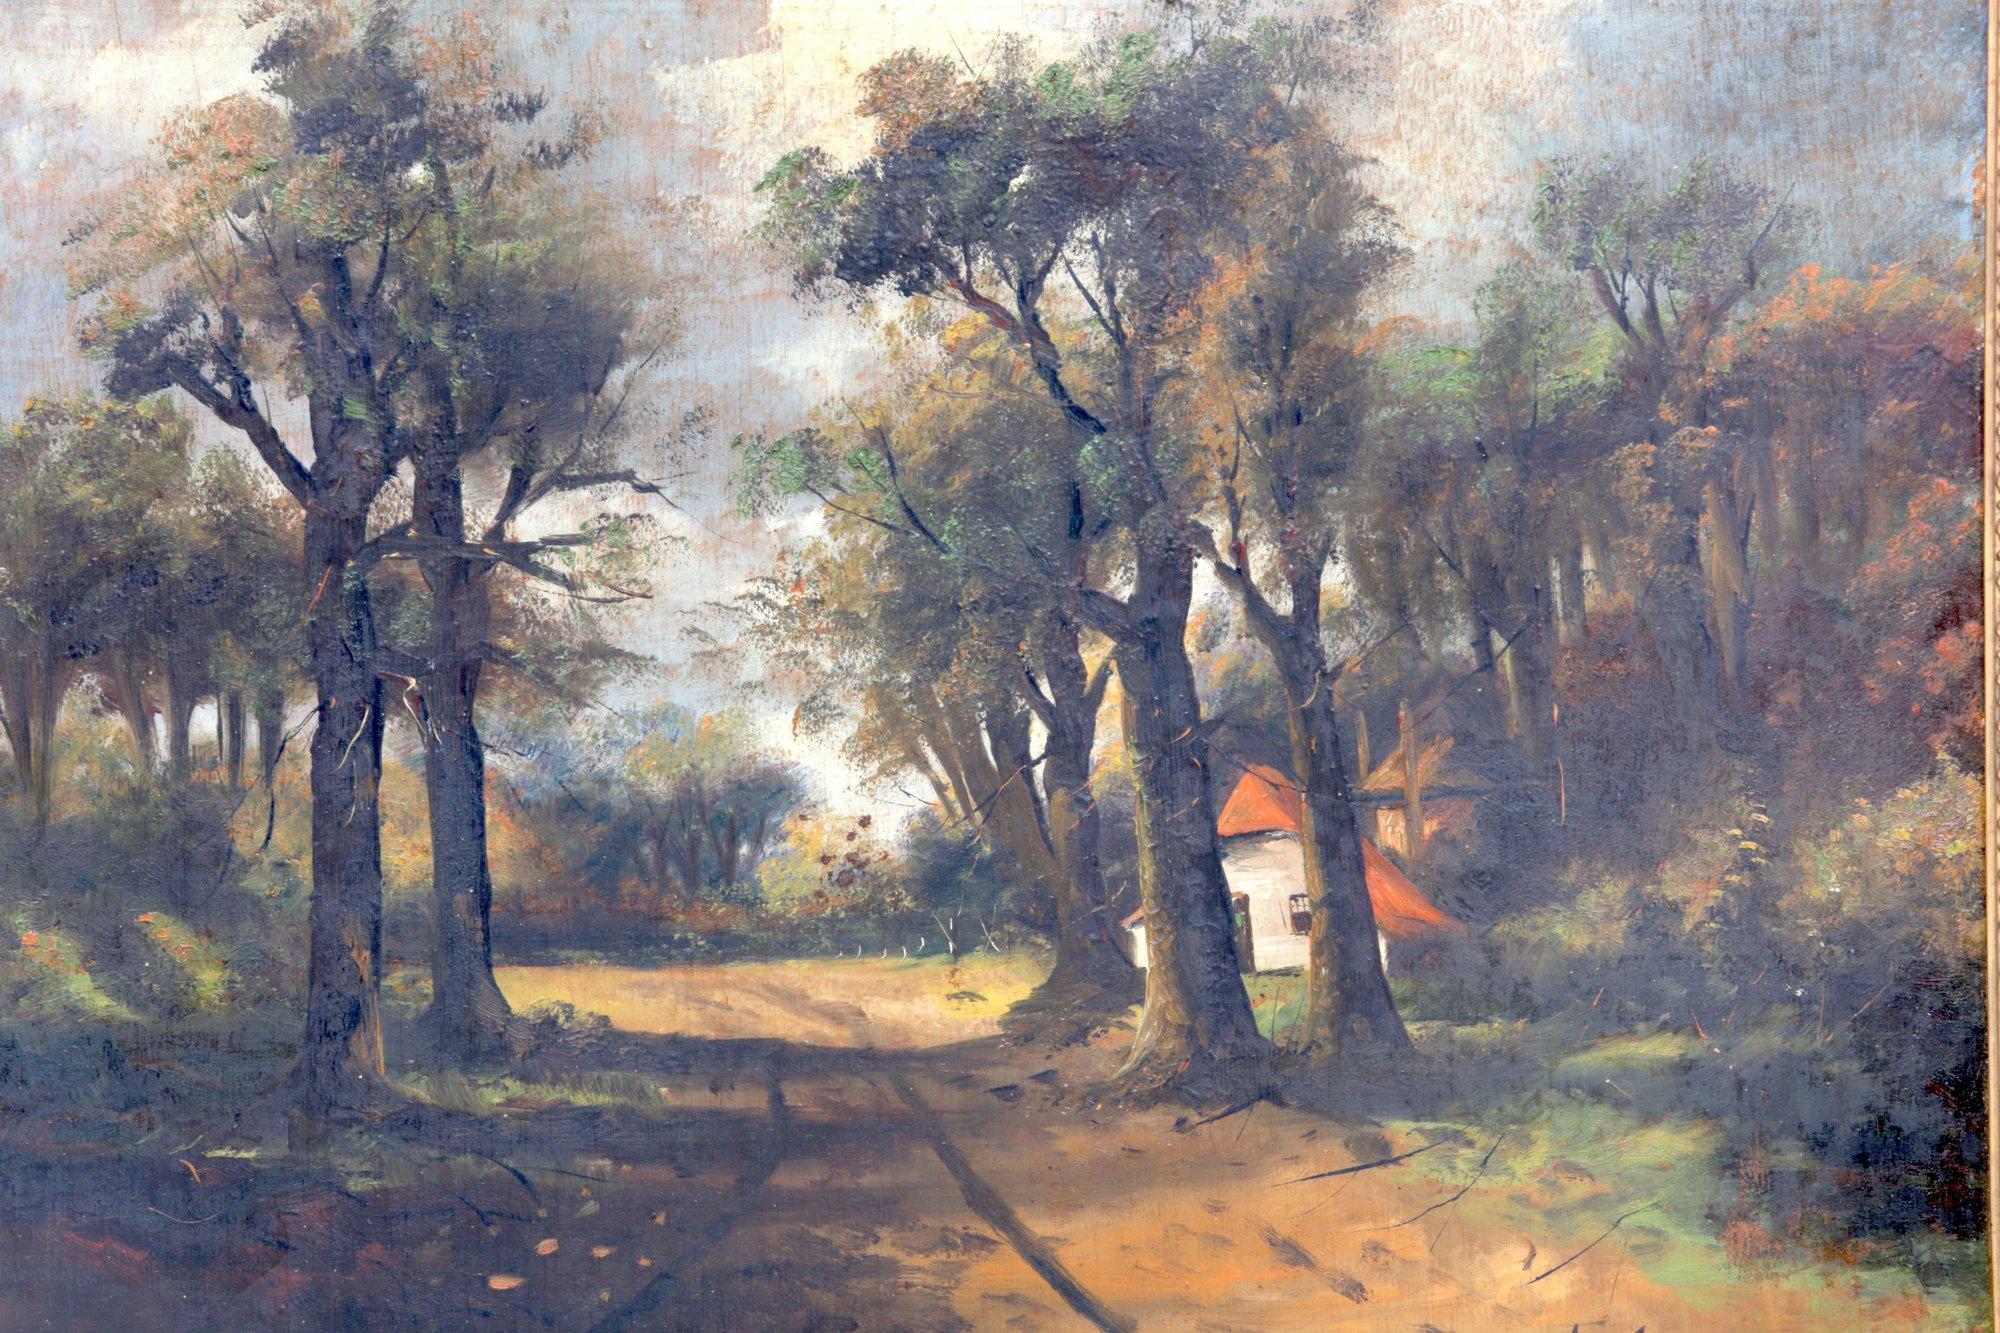 Woodlands Framed Oil Painting